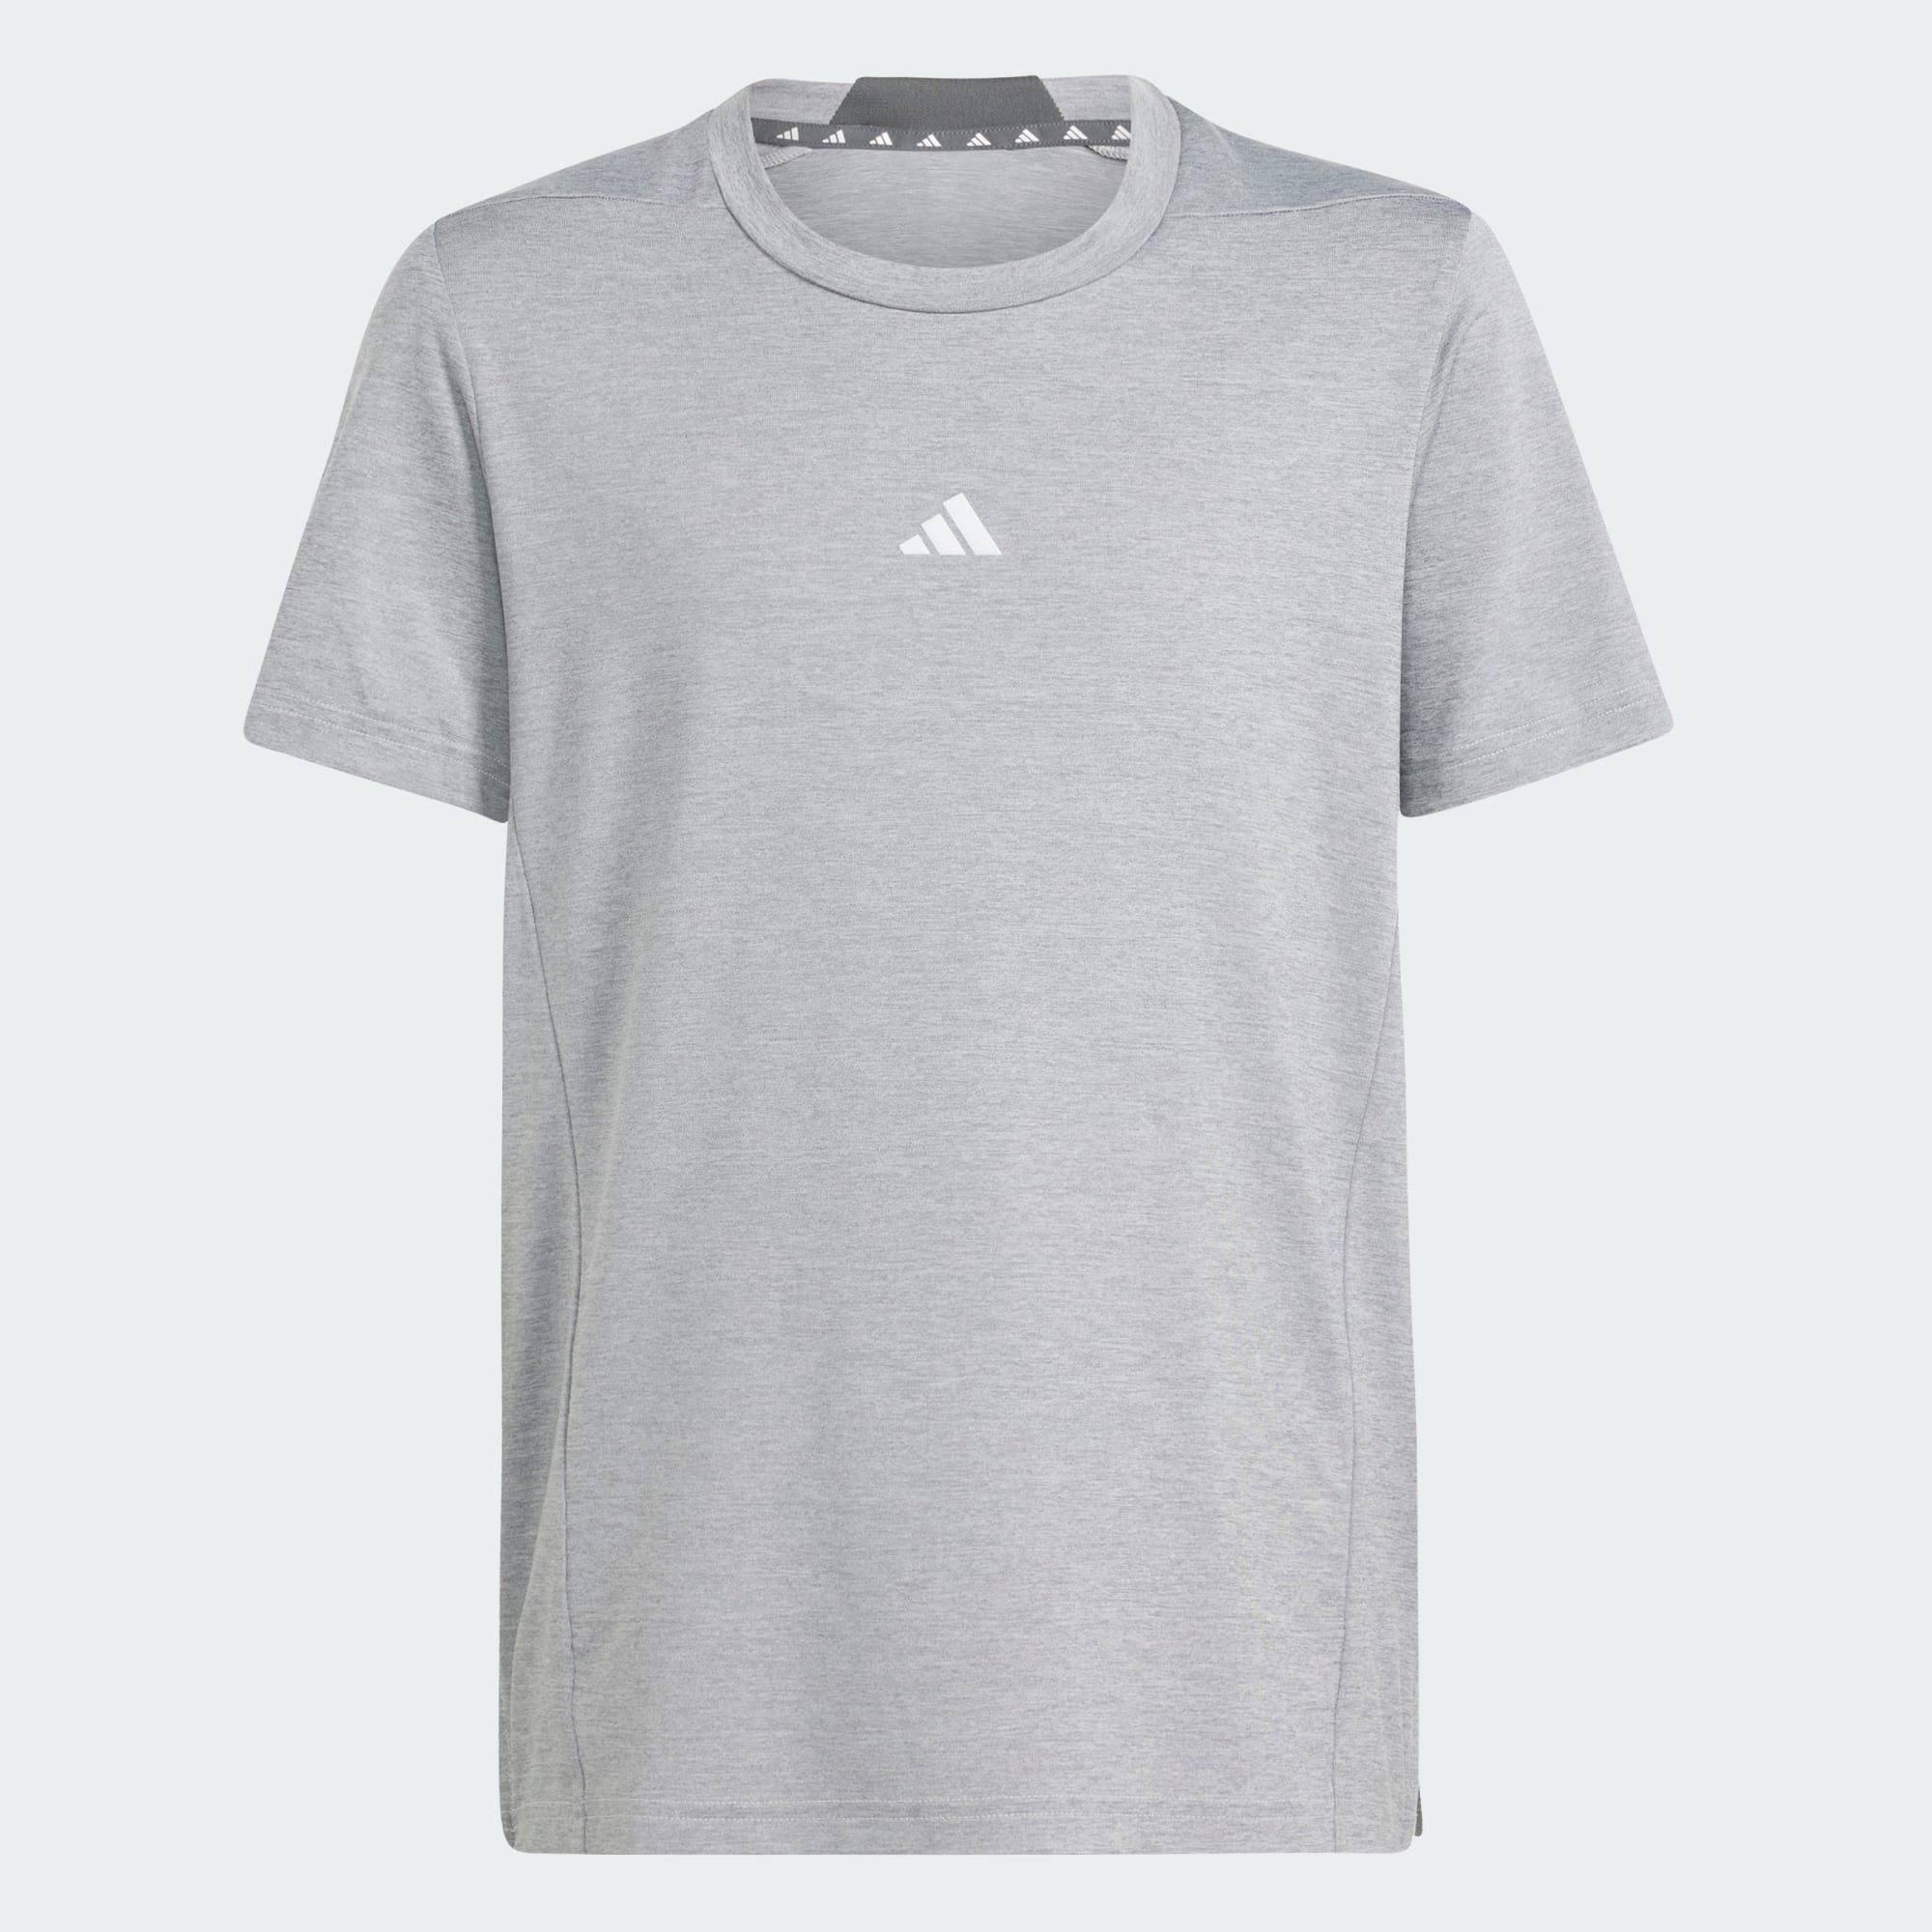 adidas Performance T-Shirt TRAINING Grey AEROREADY Reflective Grey HEATHER KIDS / / / Six Silver TEE Three One Grey